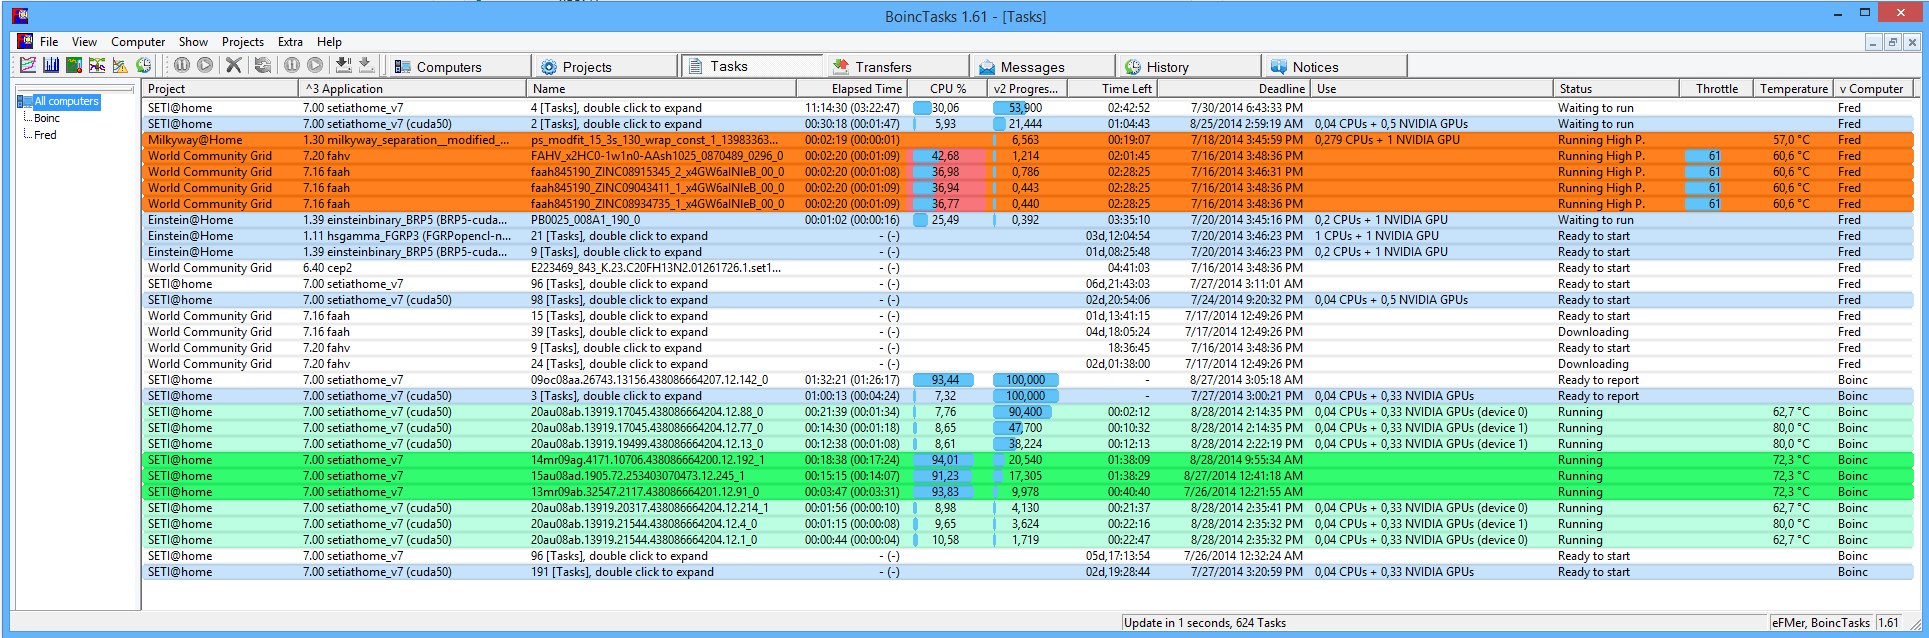 BoincTasks 1.66 software screenshot